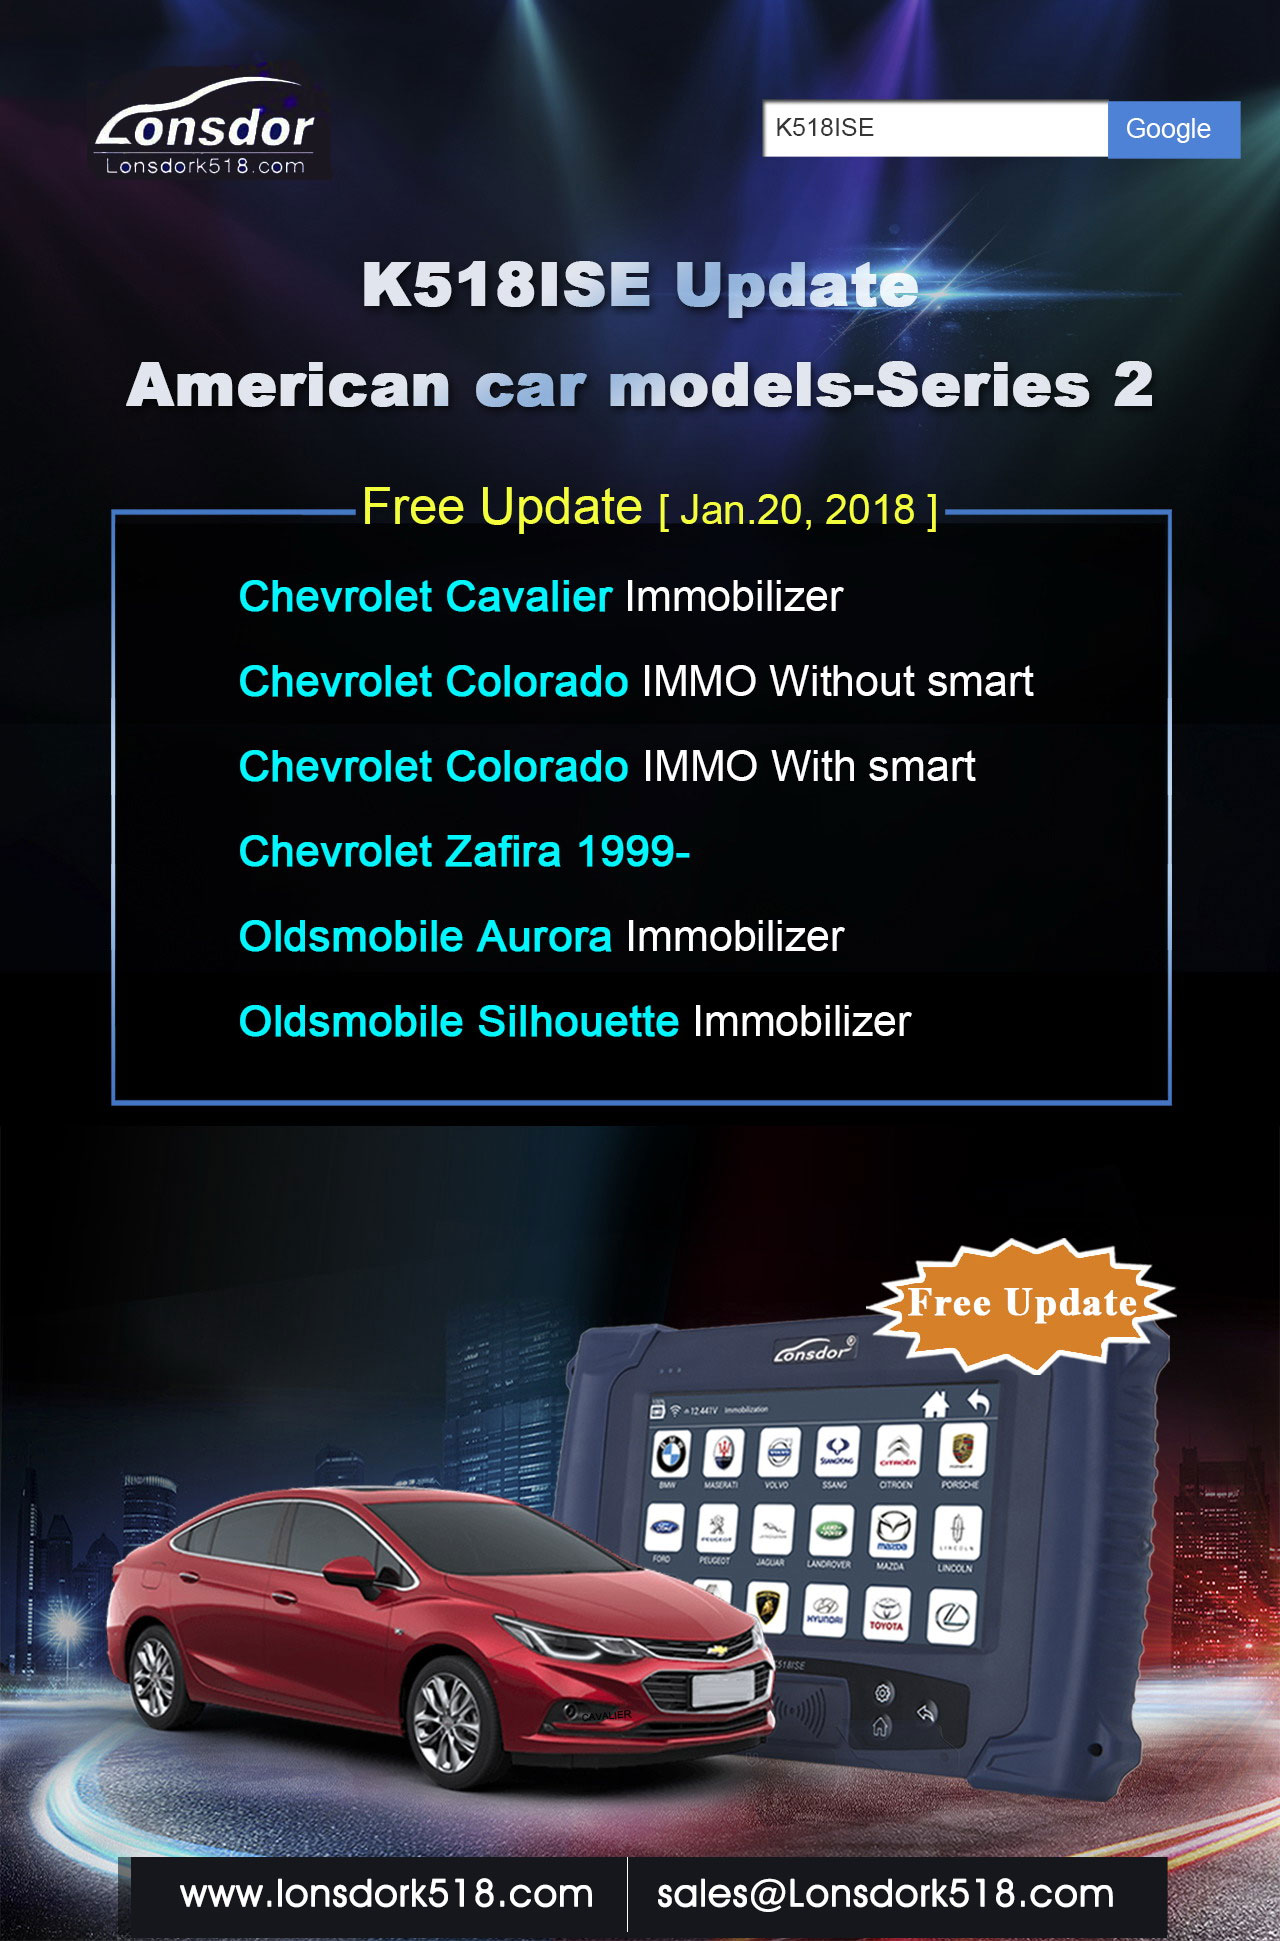 lonsdor-k518ise-American-car-free-update